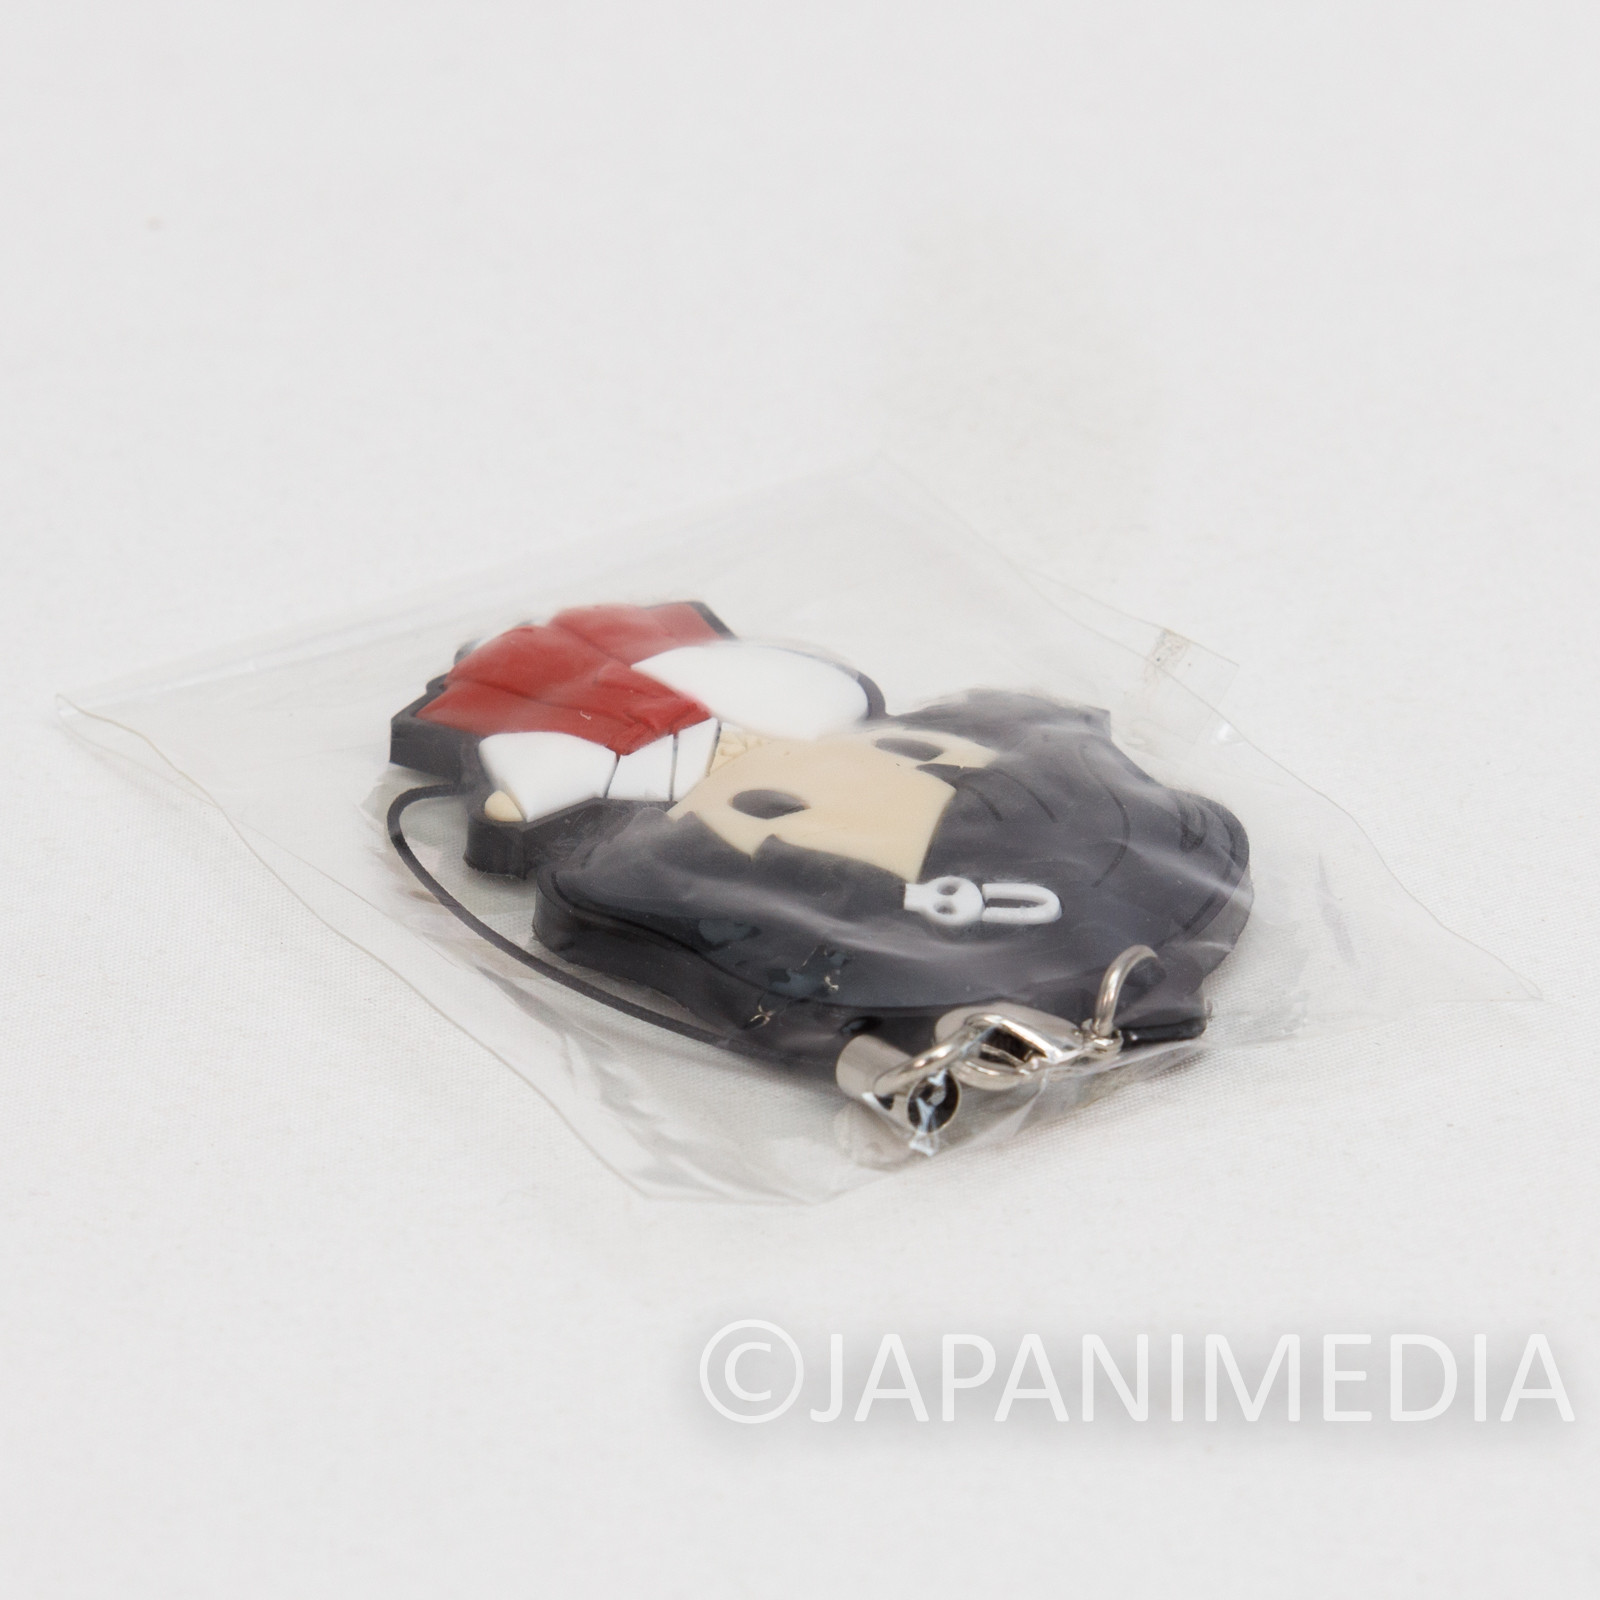 Steins ; Gate Ruka Urushibara Mascot Rubber Strap JAPAN ANIME